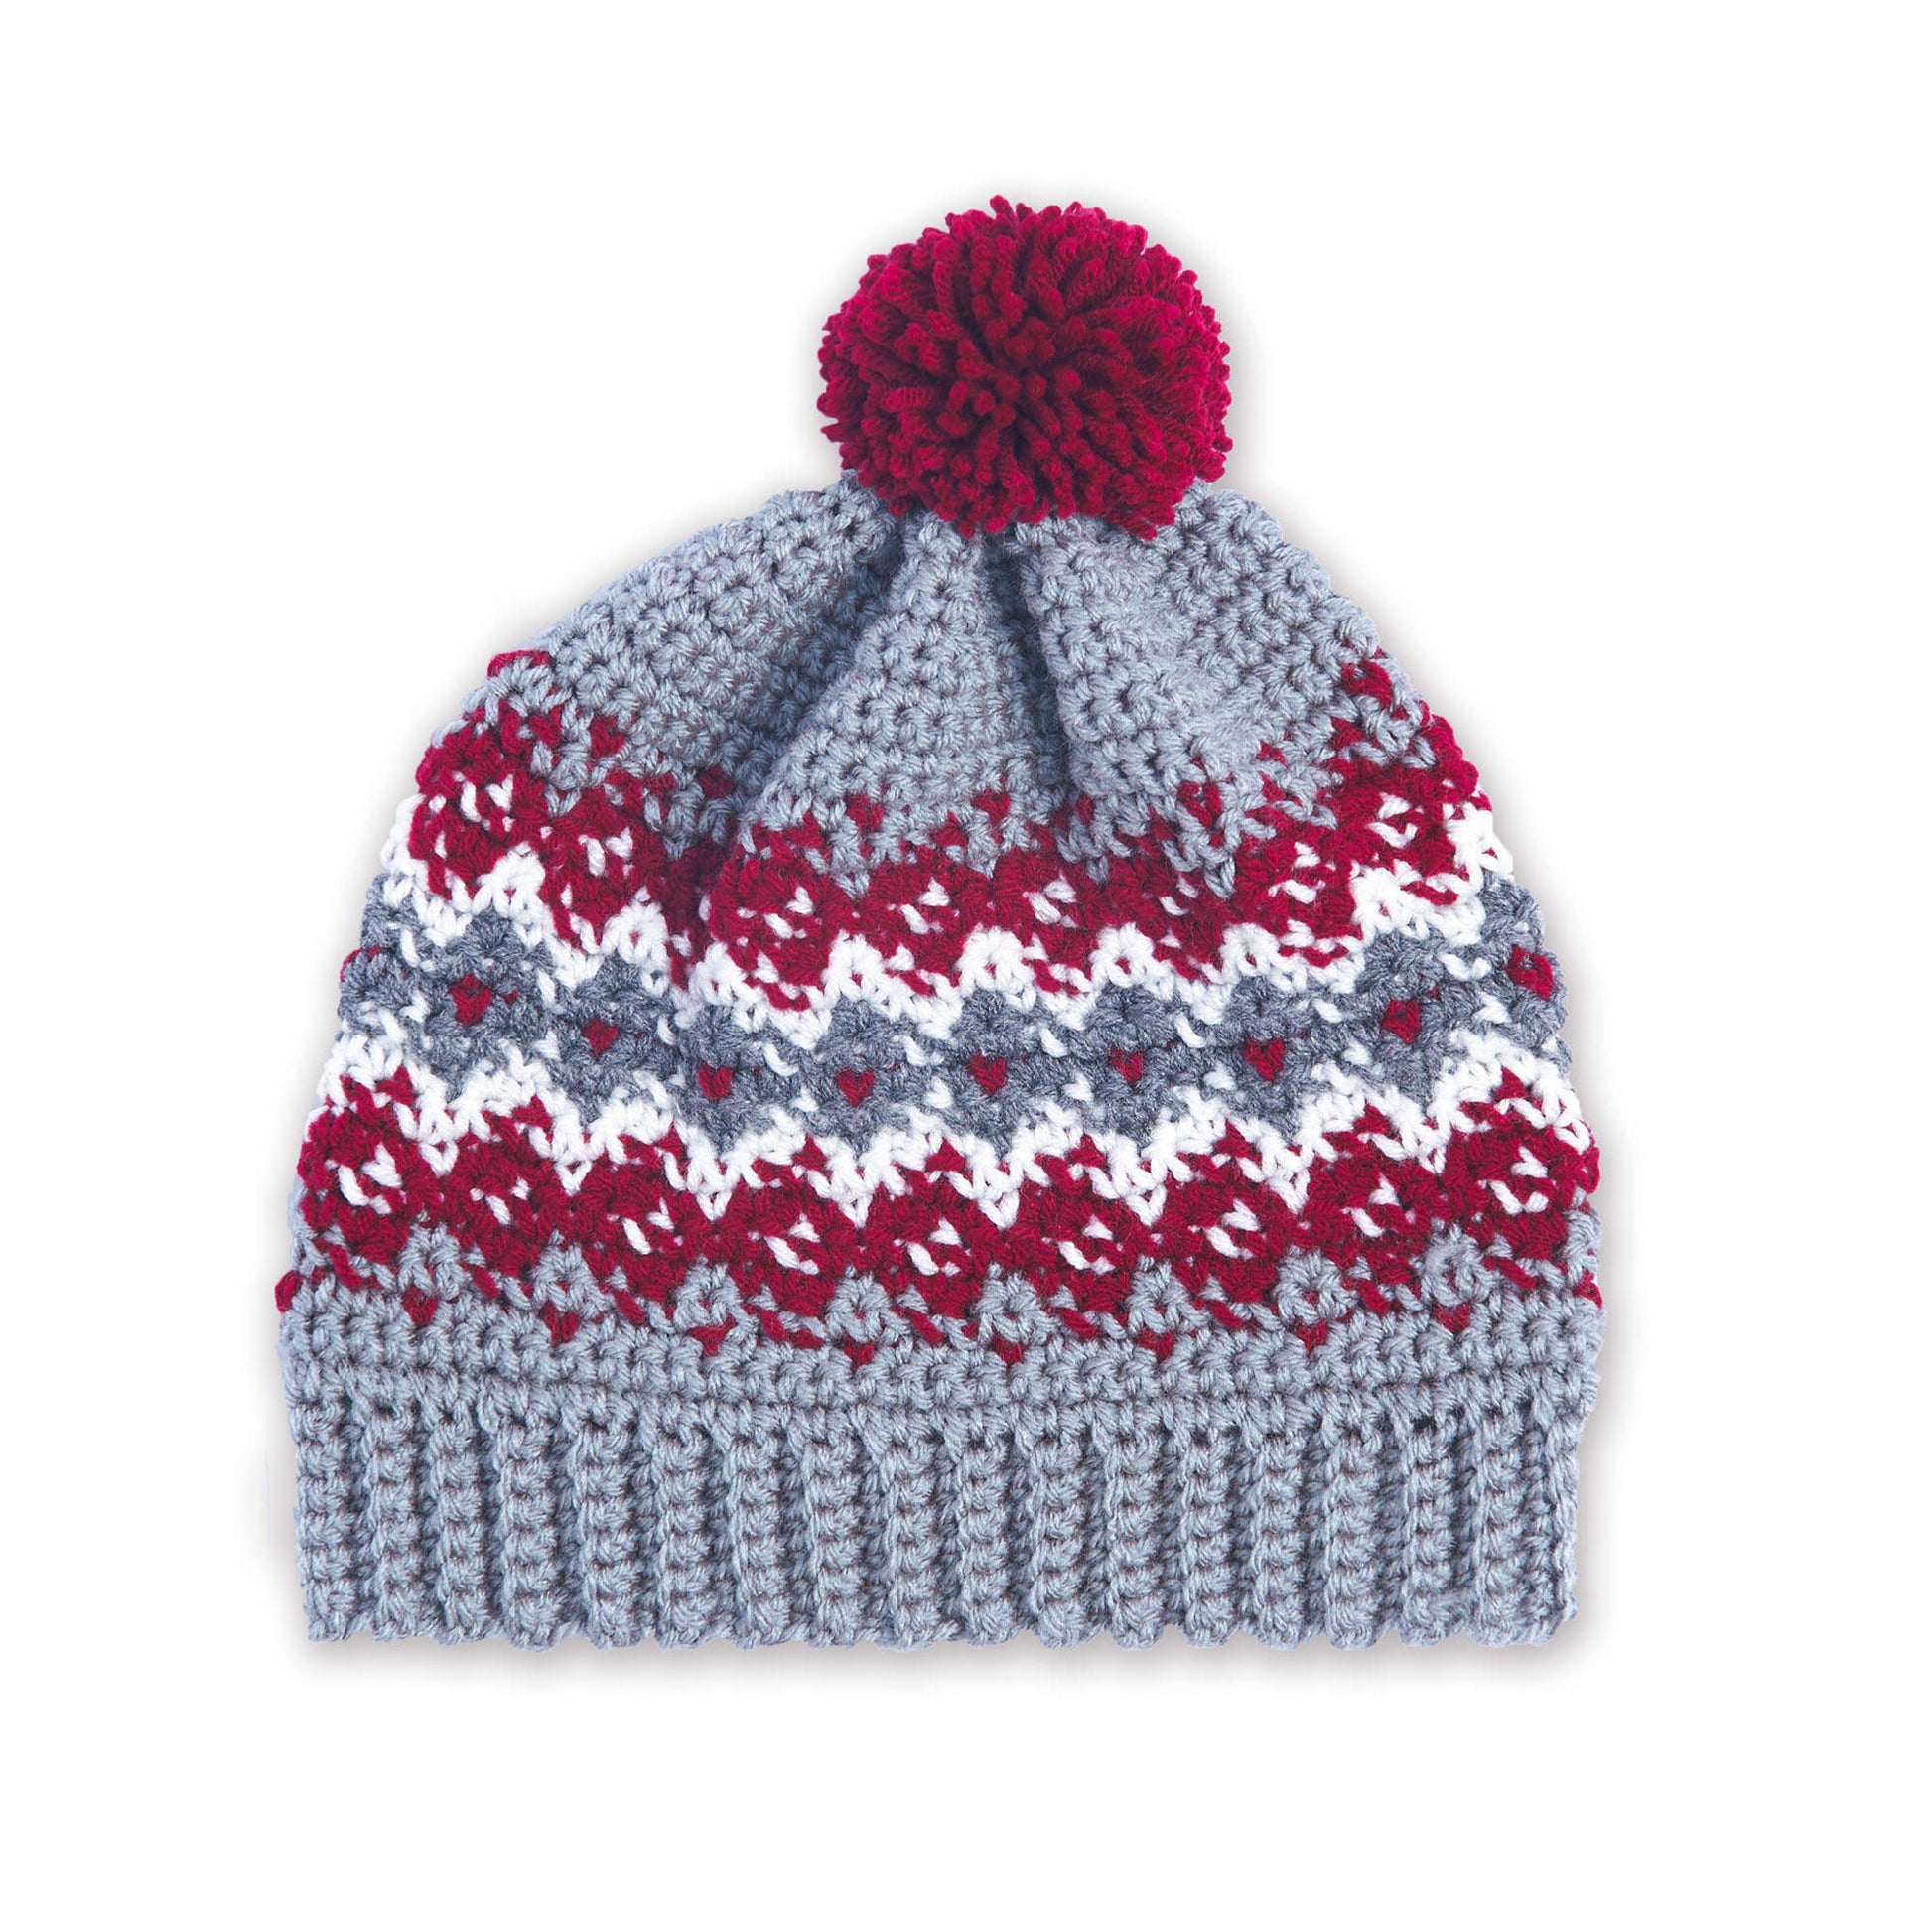 Free Red Heart Crochet Colorwork Family Hats Pattern